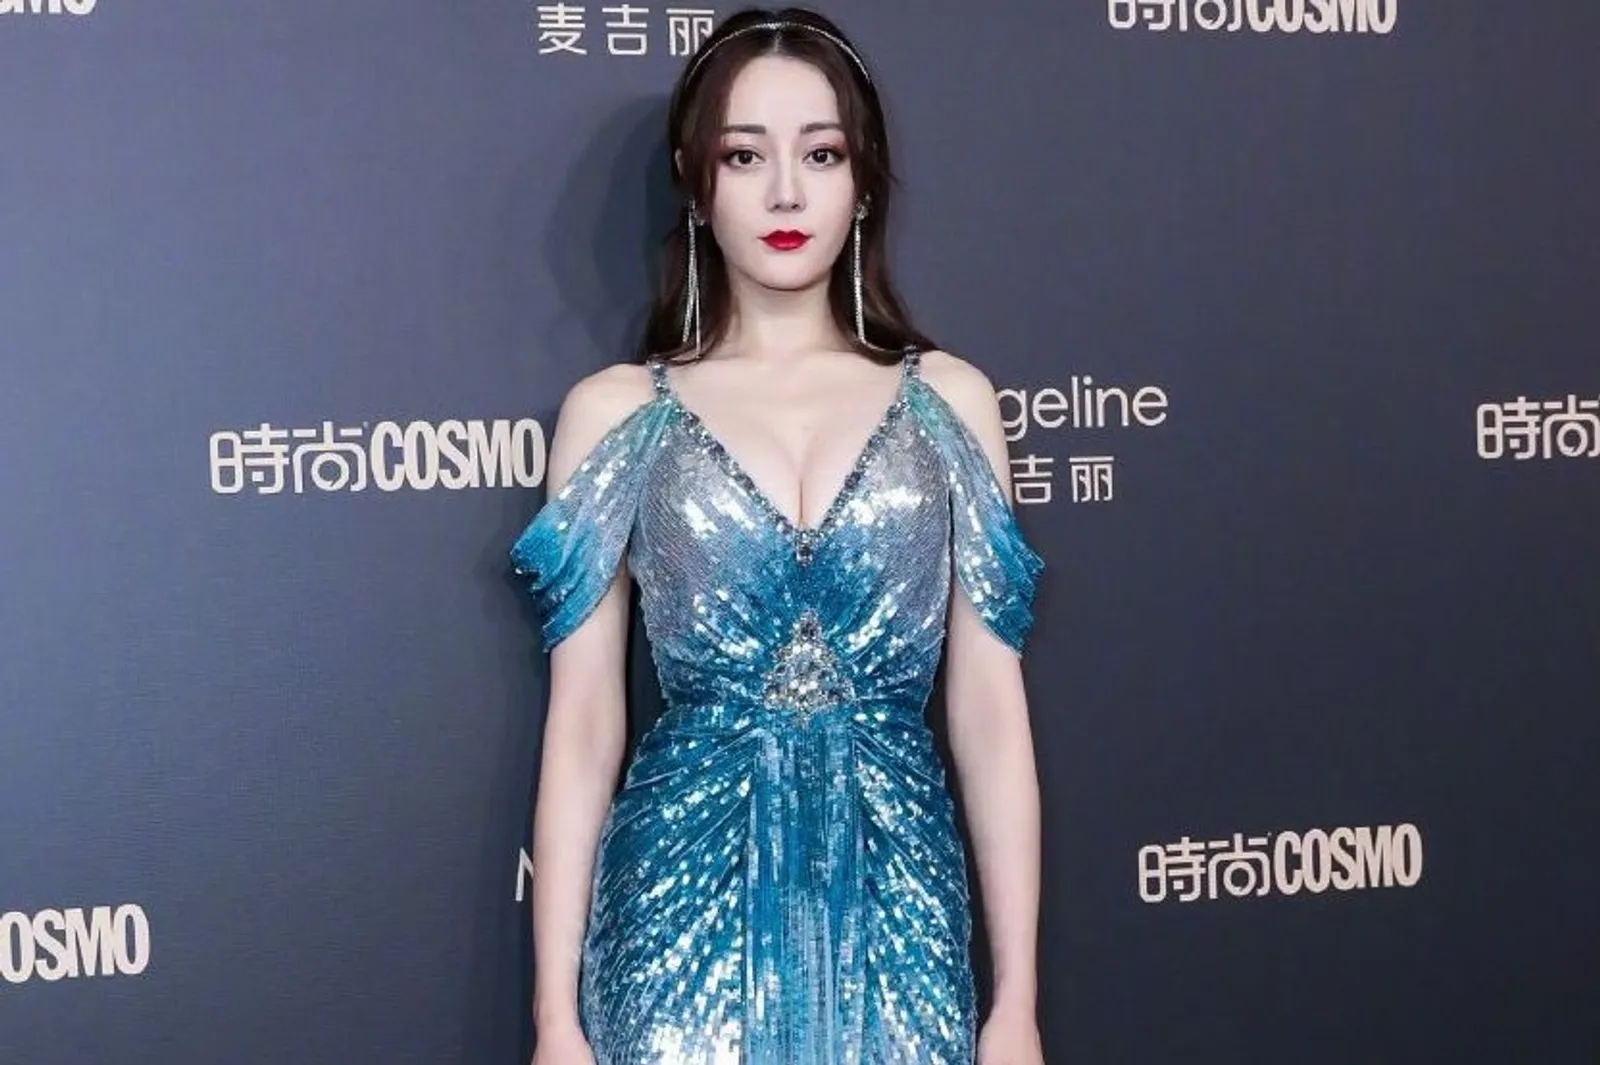 Deretan Gaun Mewah Artis Tiongkok di Karpet Merah, Elegan hingga Seksi